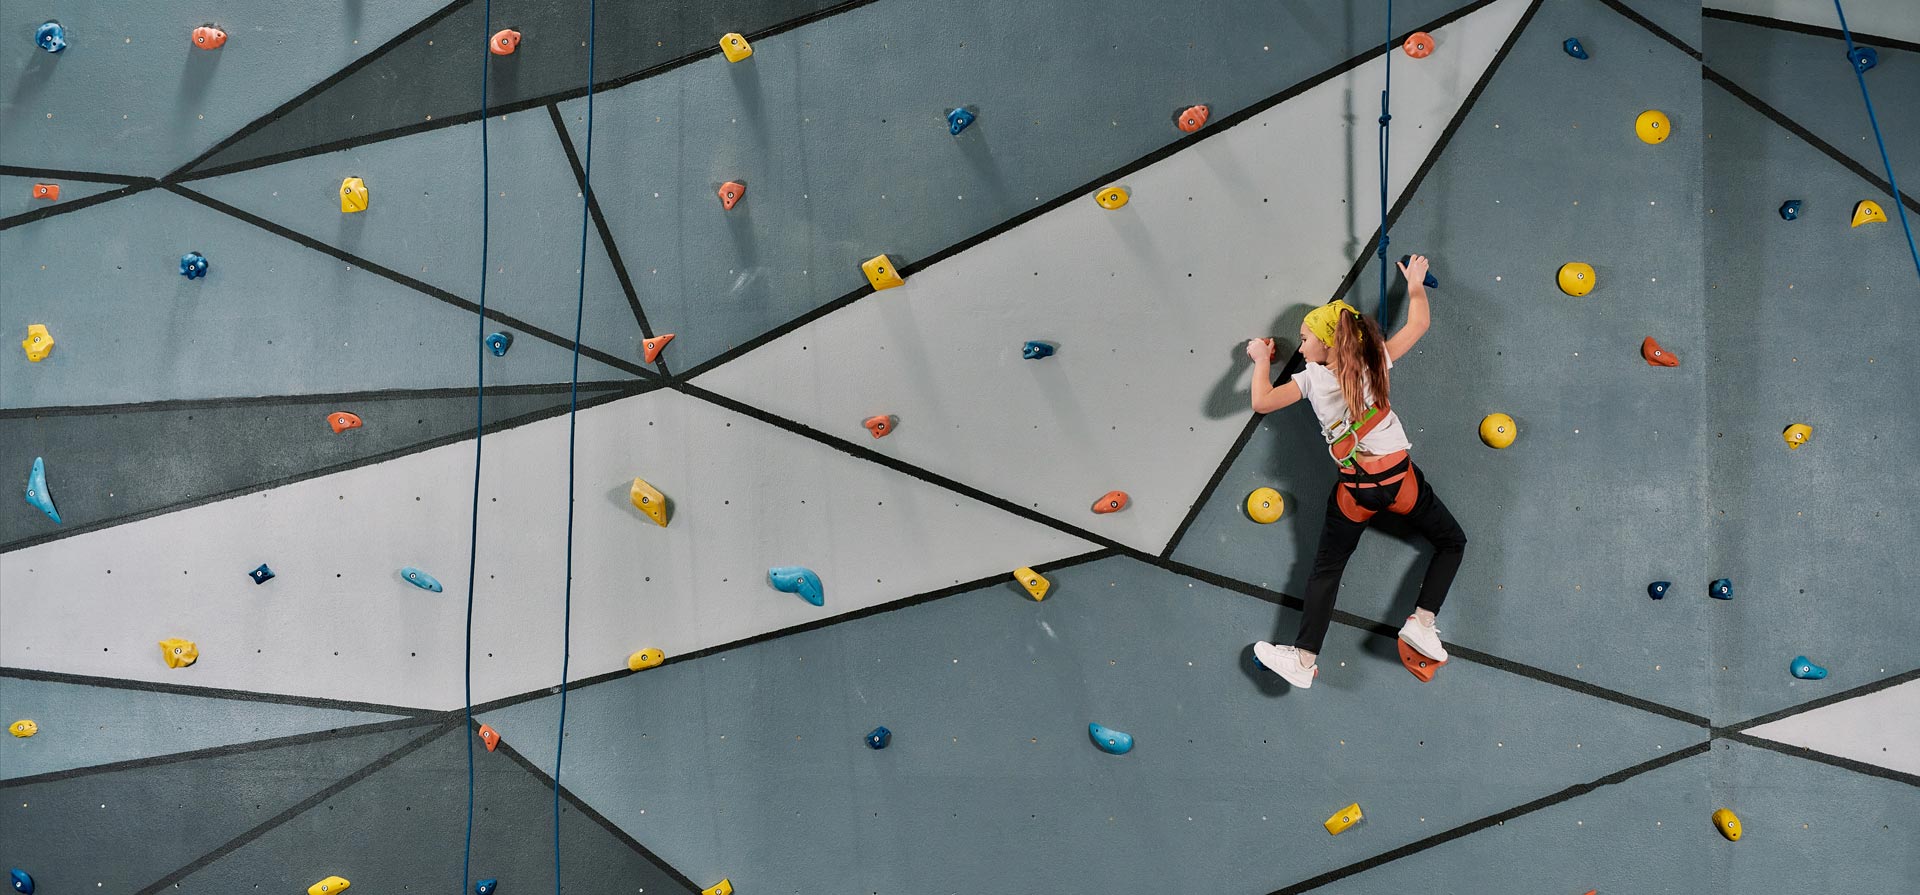 A young girl climbing on an indoor climbing wall.